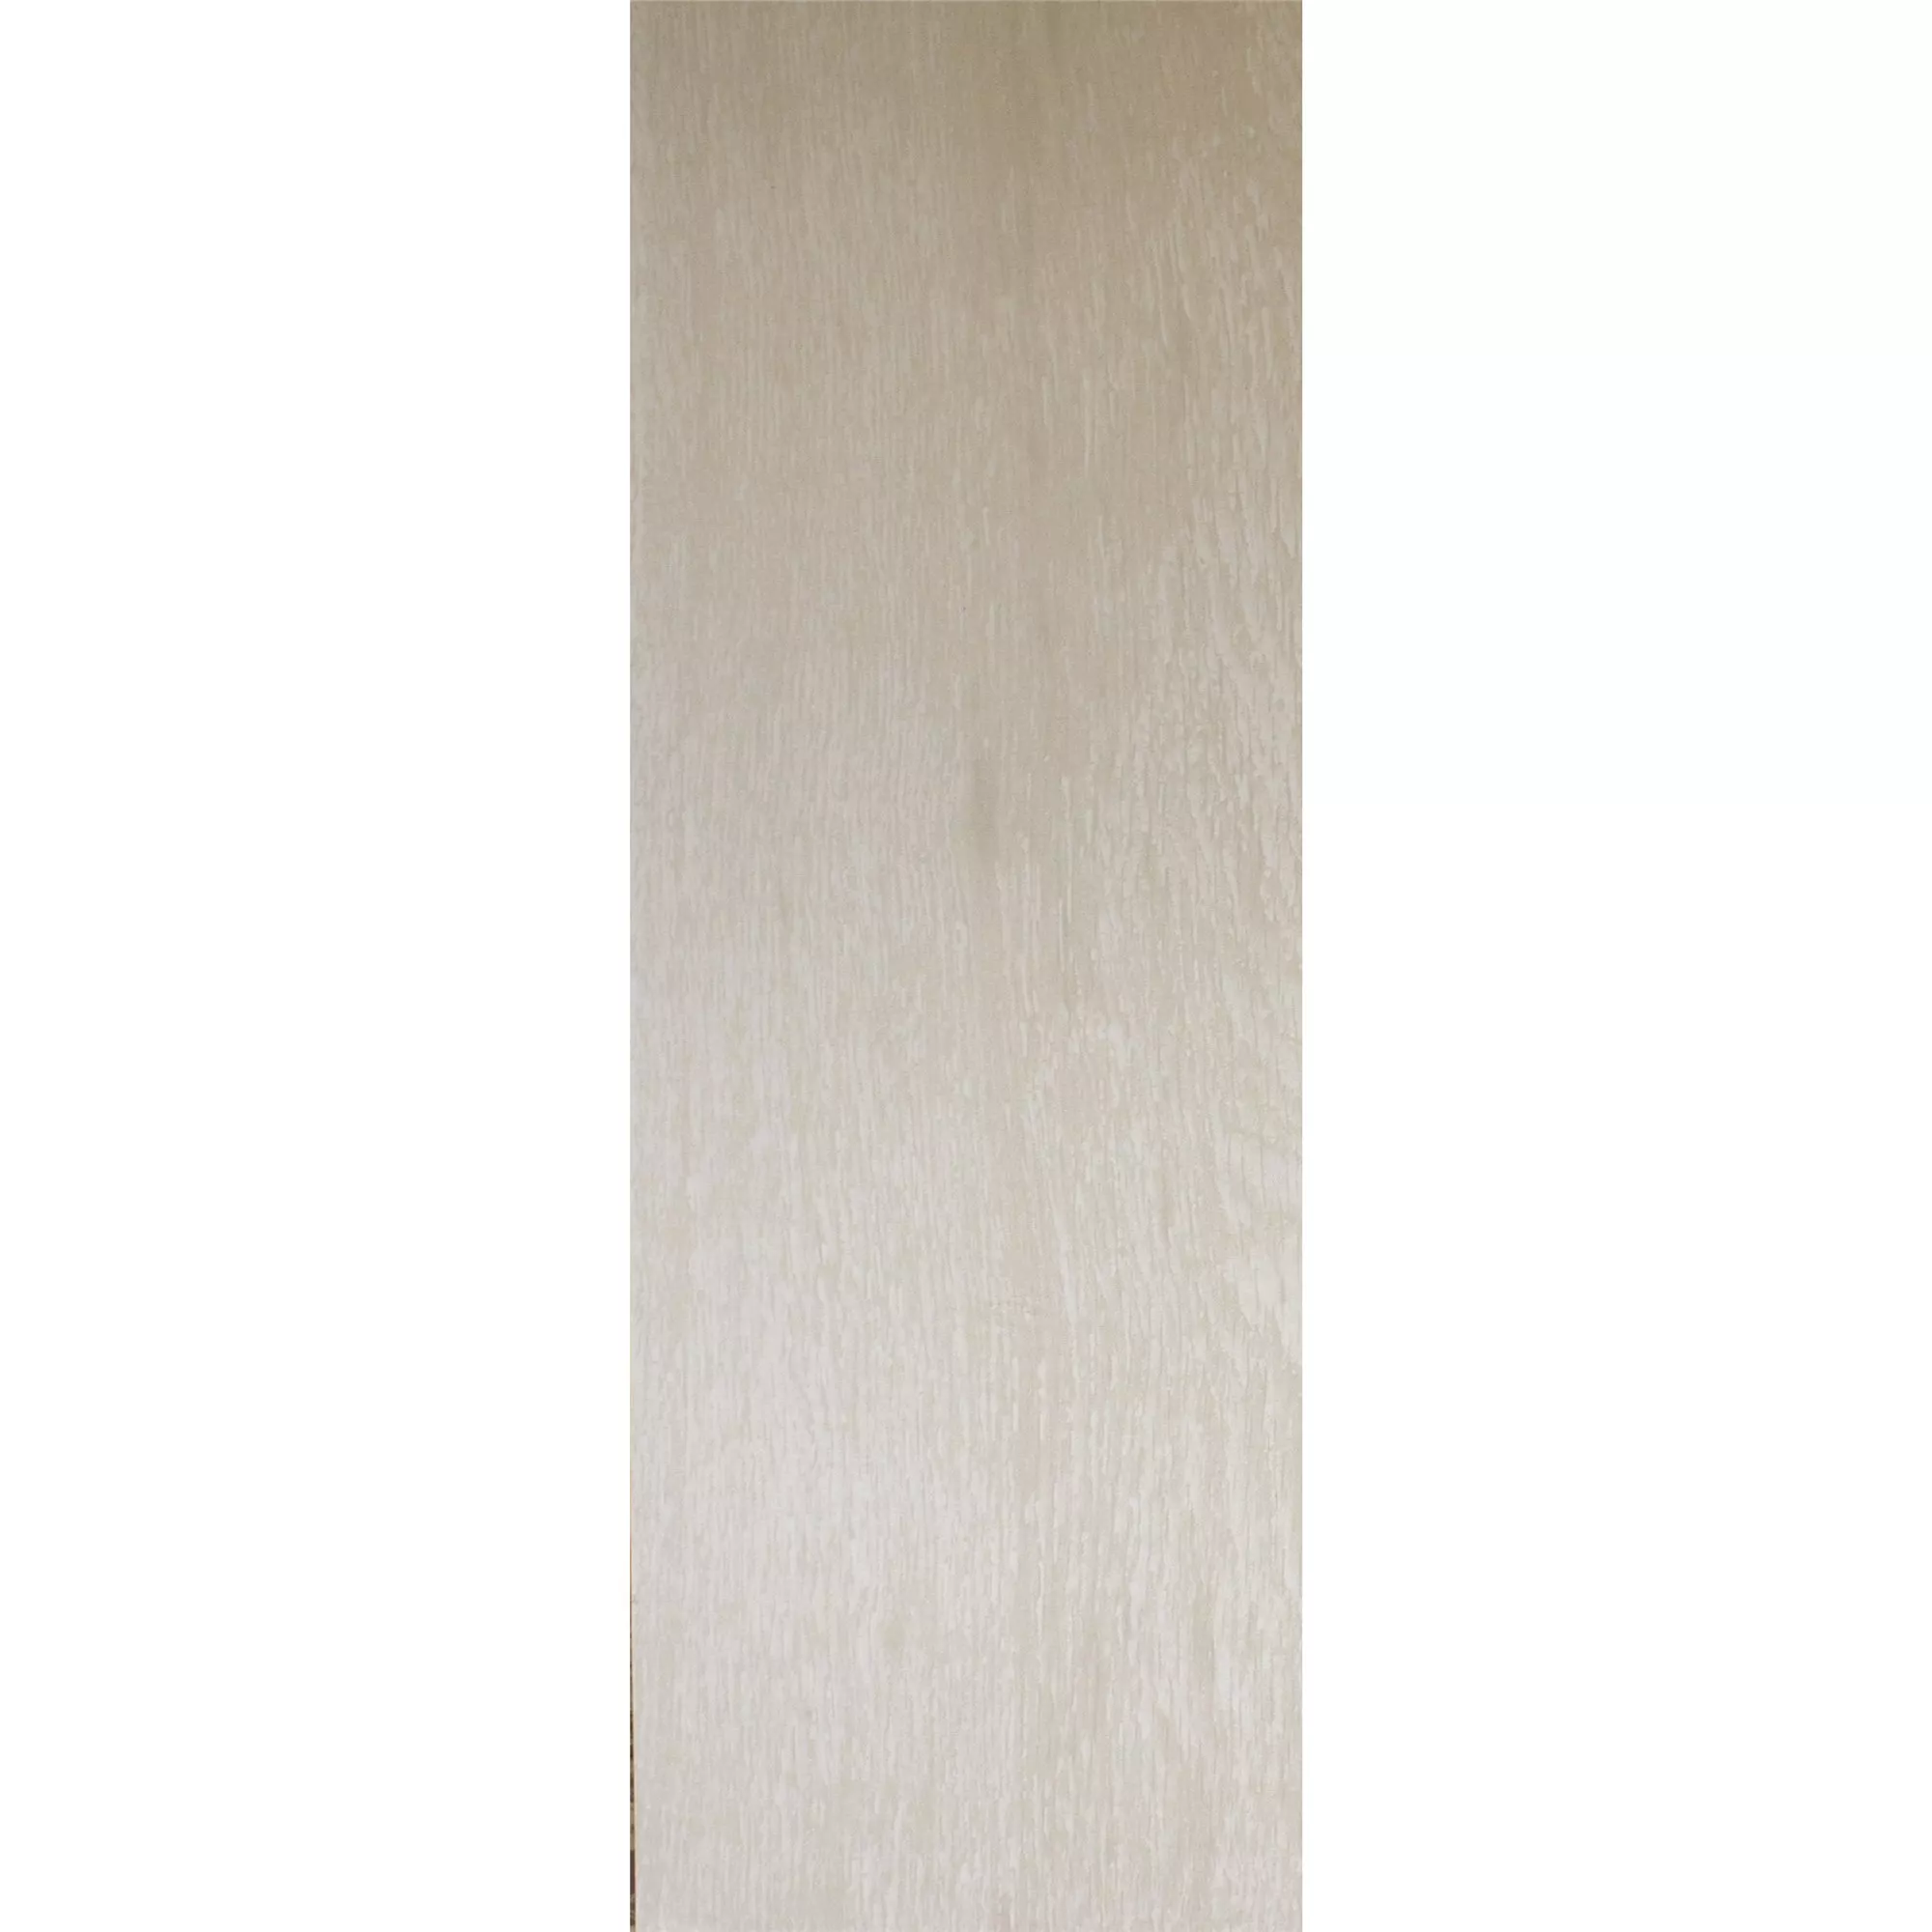 Muestra Pavimento Herakles Aspecto De Madera White 20x120cm